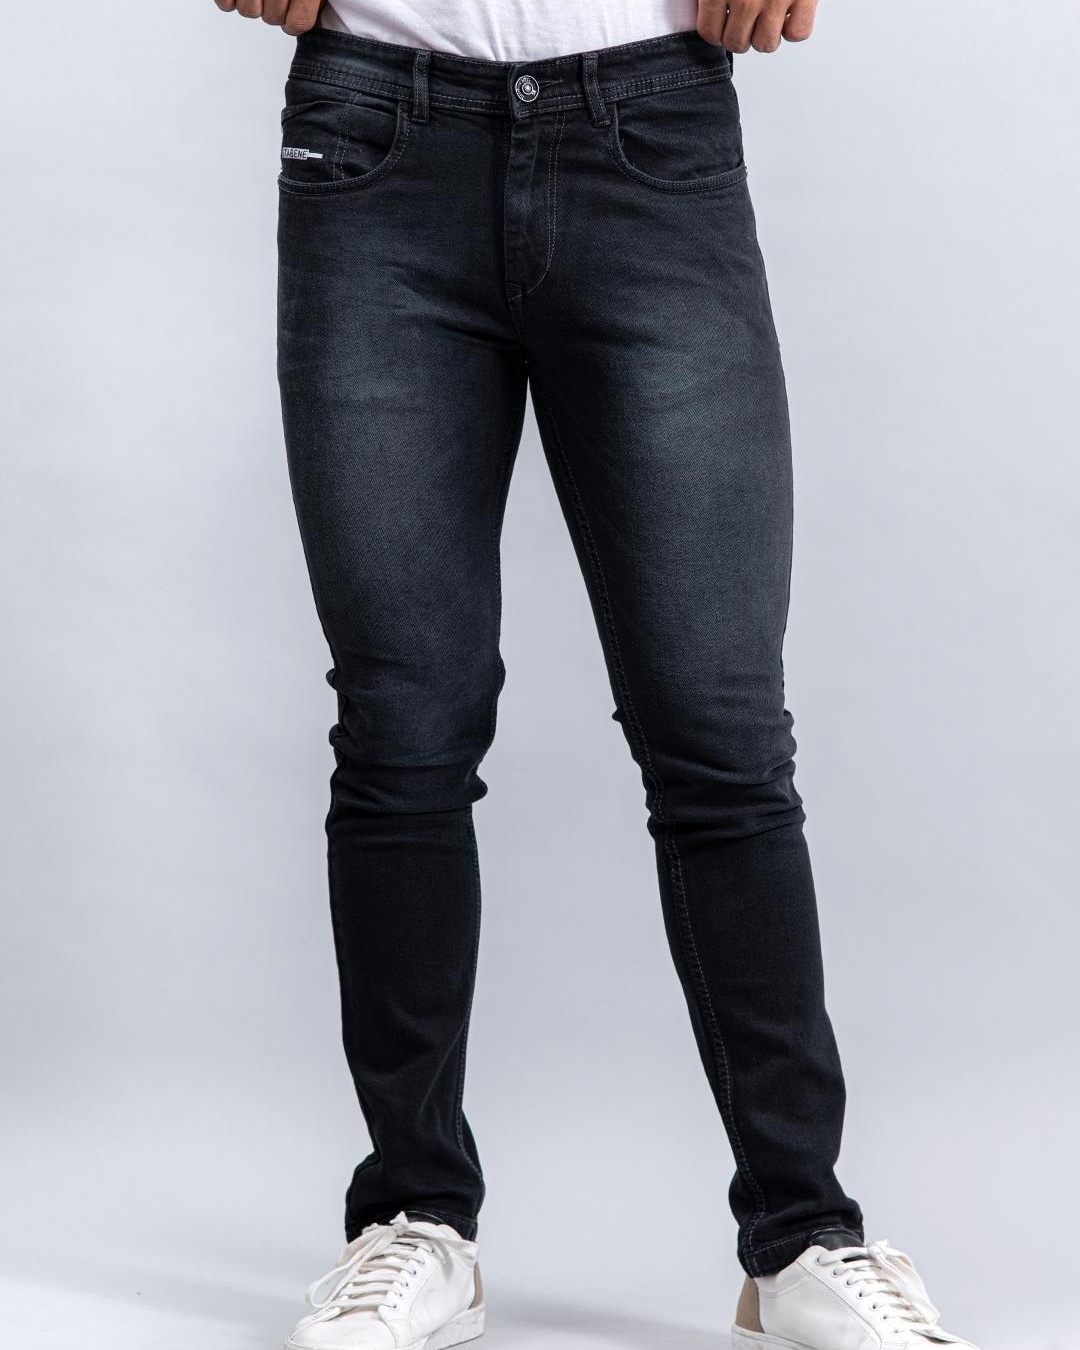 Buy Men's Grey Washed Jeans Online at Bewakoof